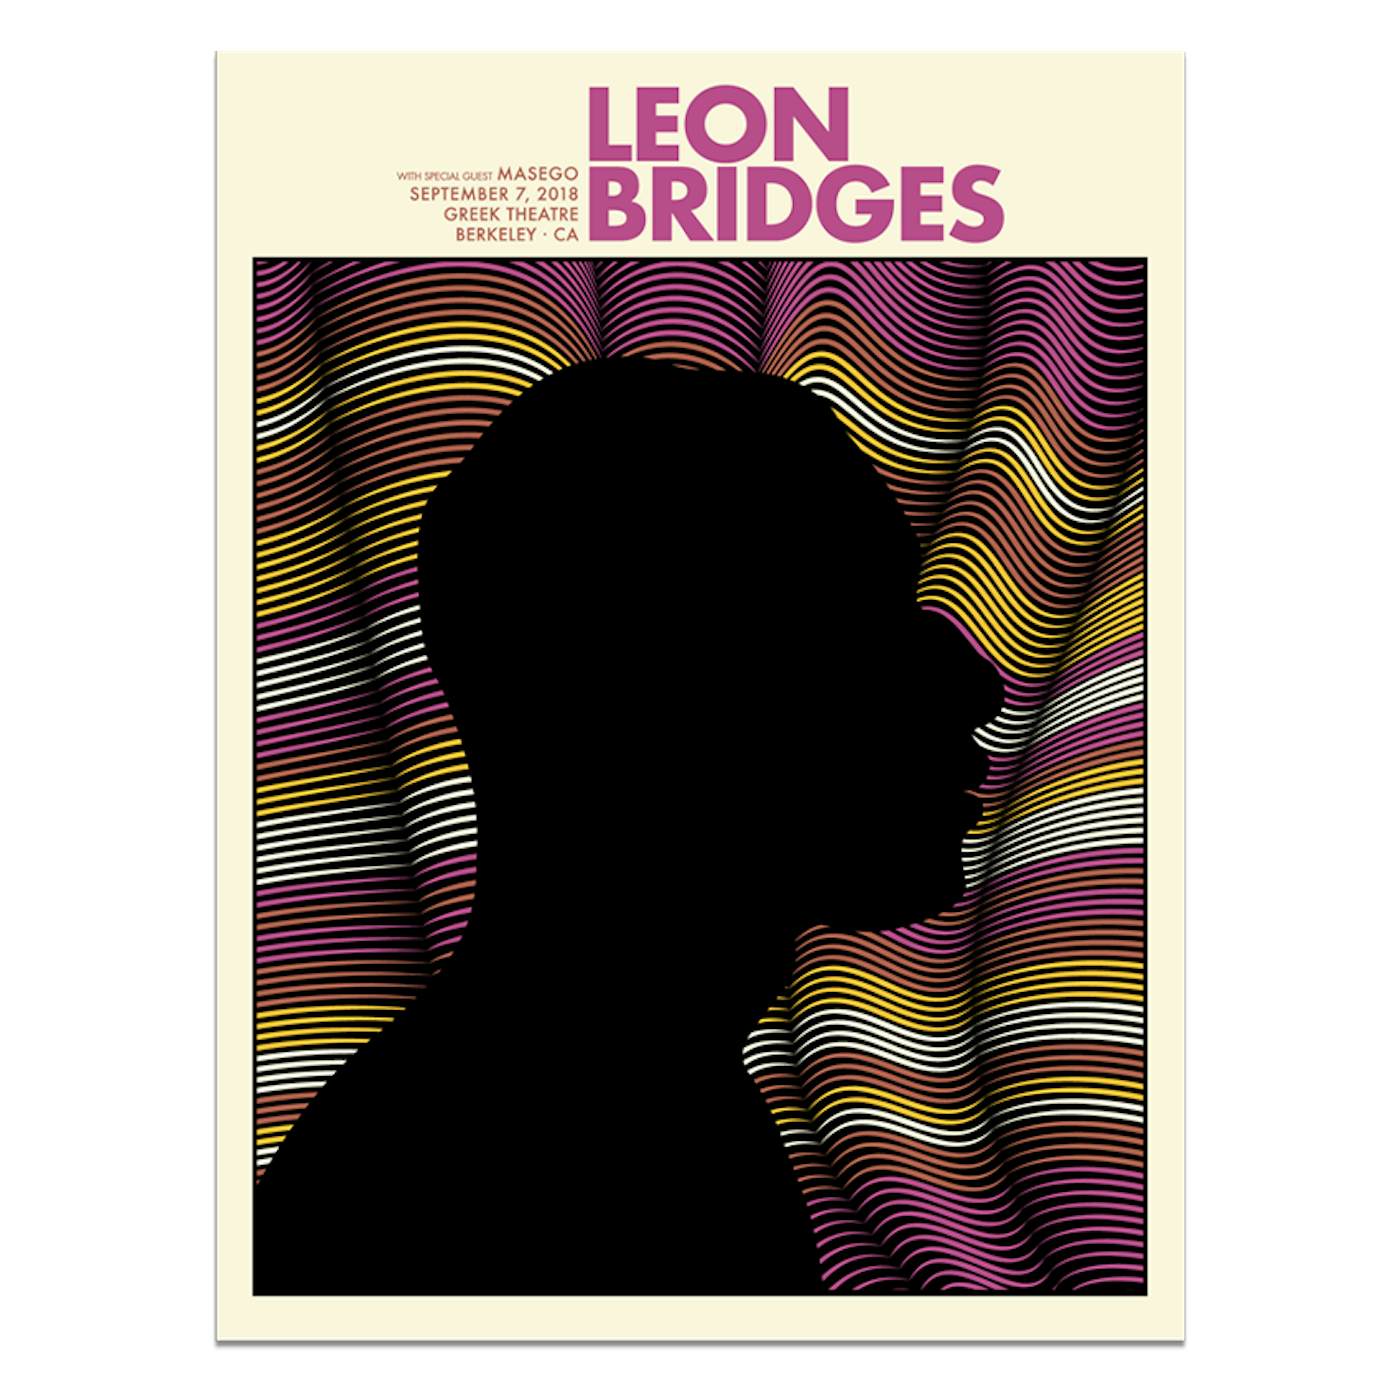 Leon Bridges Berkeley, CA Greek Theatre September 7, 2018